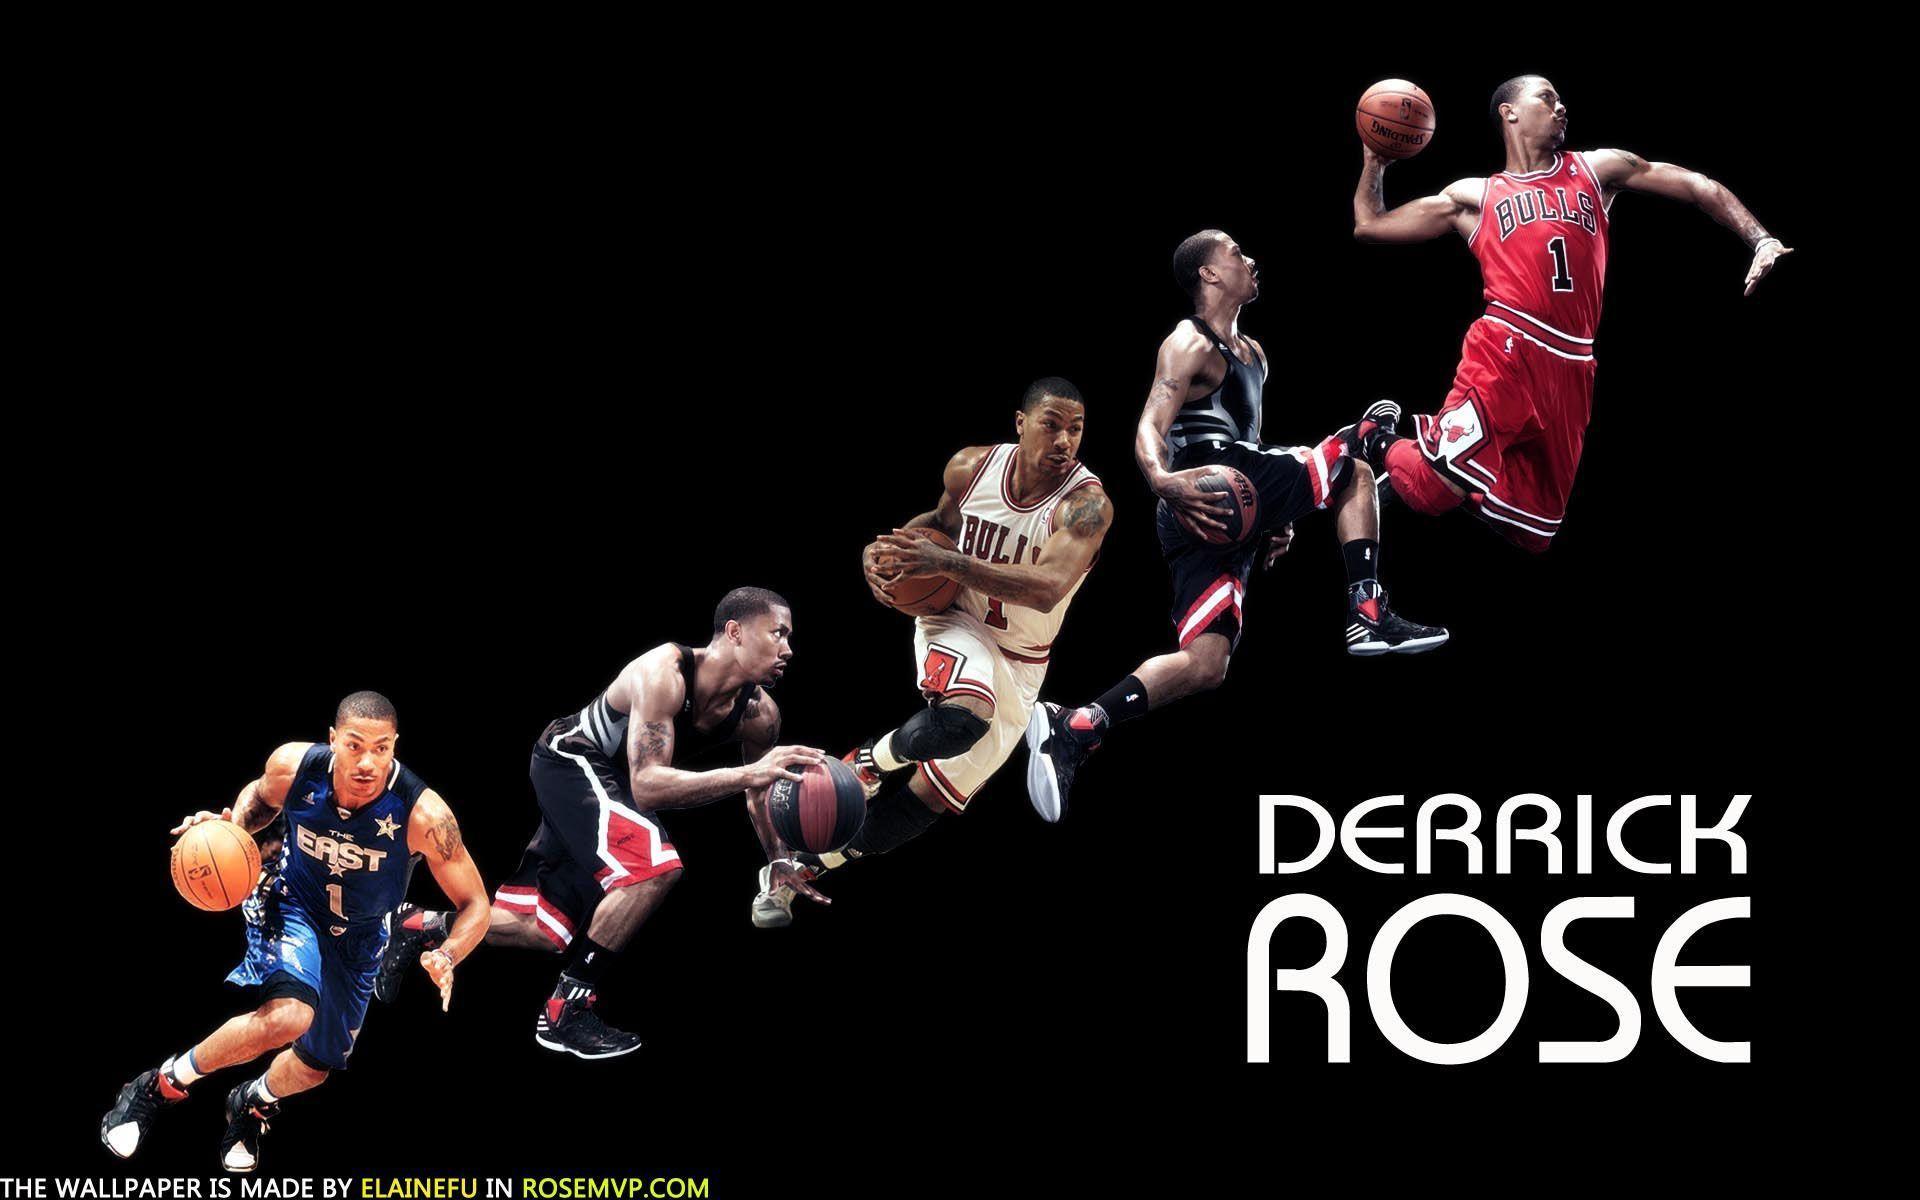 Free Download Derrick Rose Wallpaper HD. Wallpaper, Background